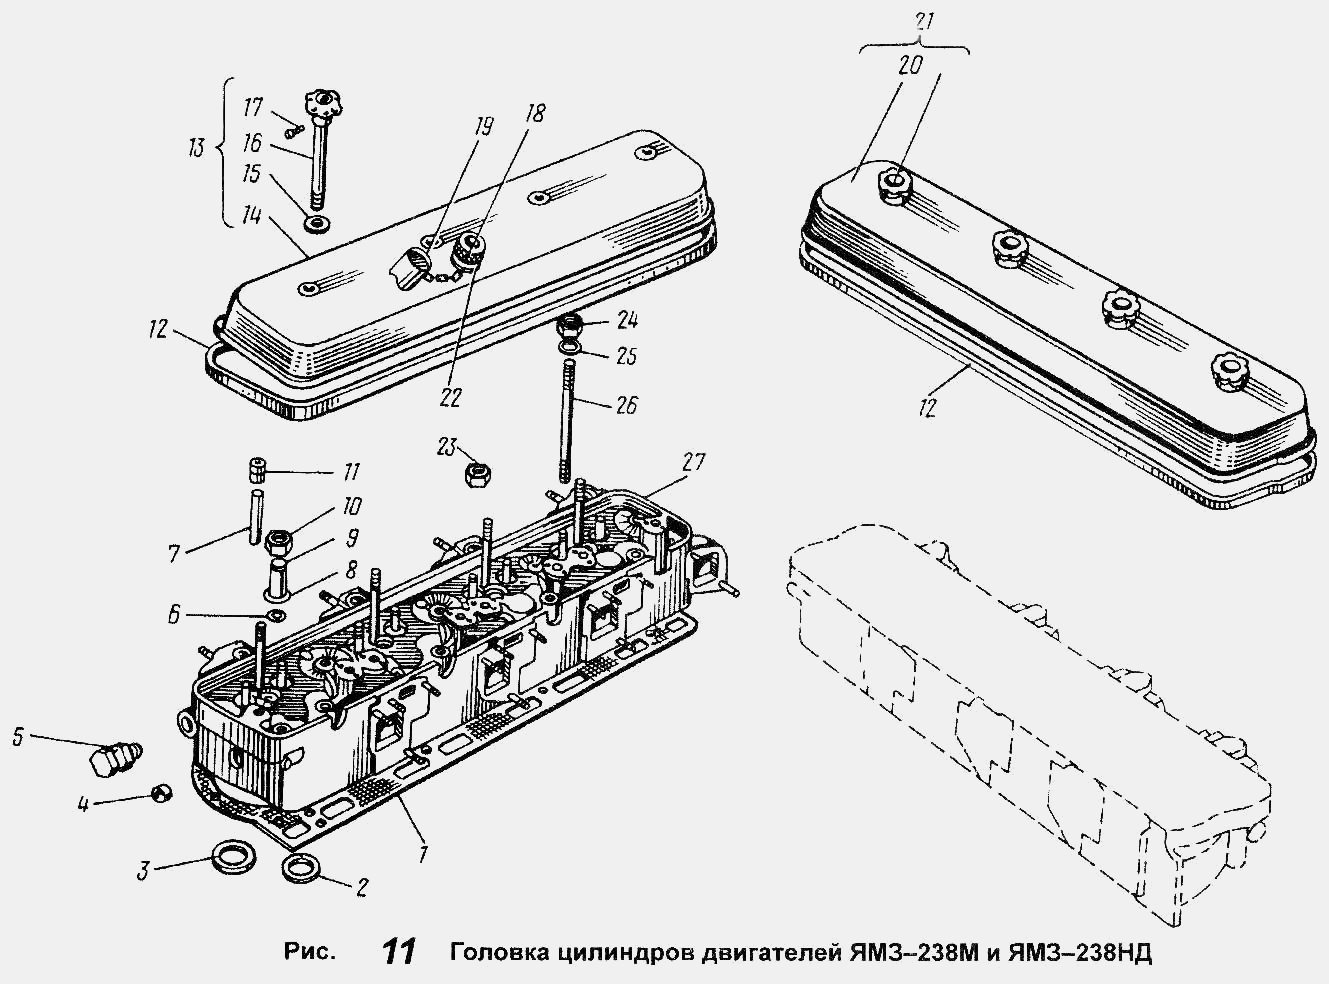 Головка цилиндров двигателей ЯМЗ-238М и ЯМЗ-238НД ЯМЗ  -  общий  каталог